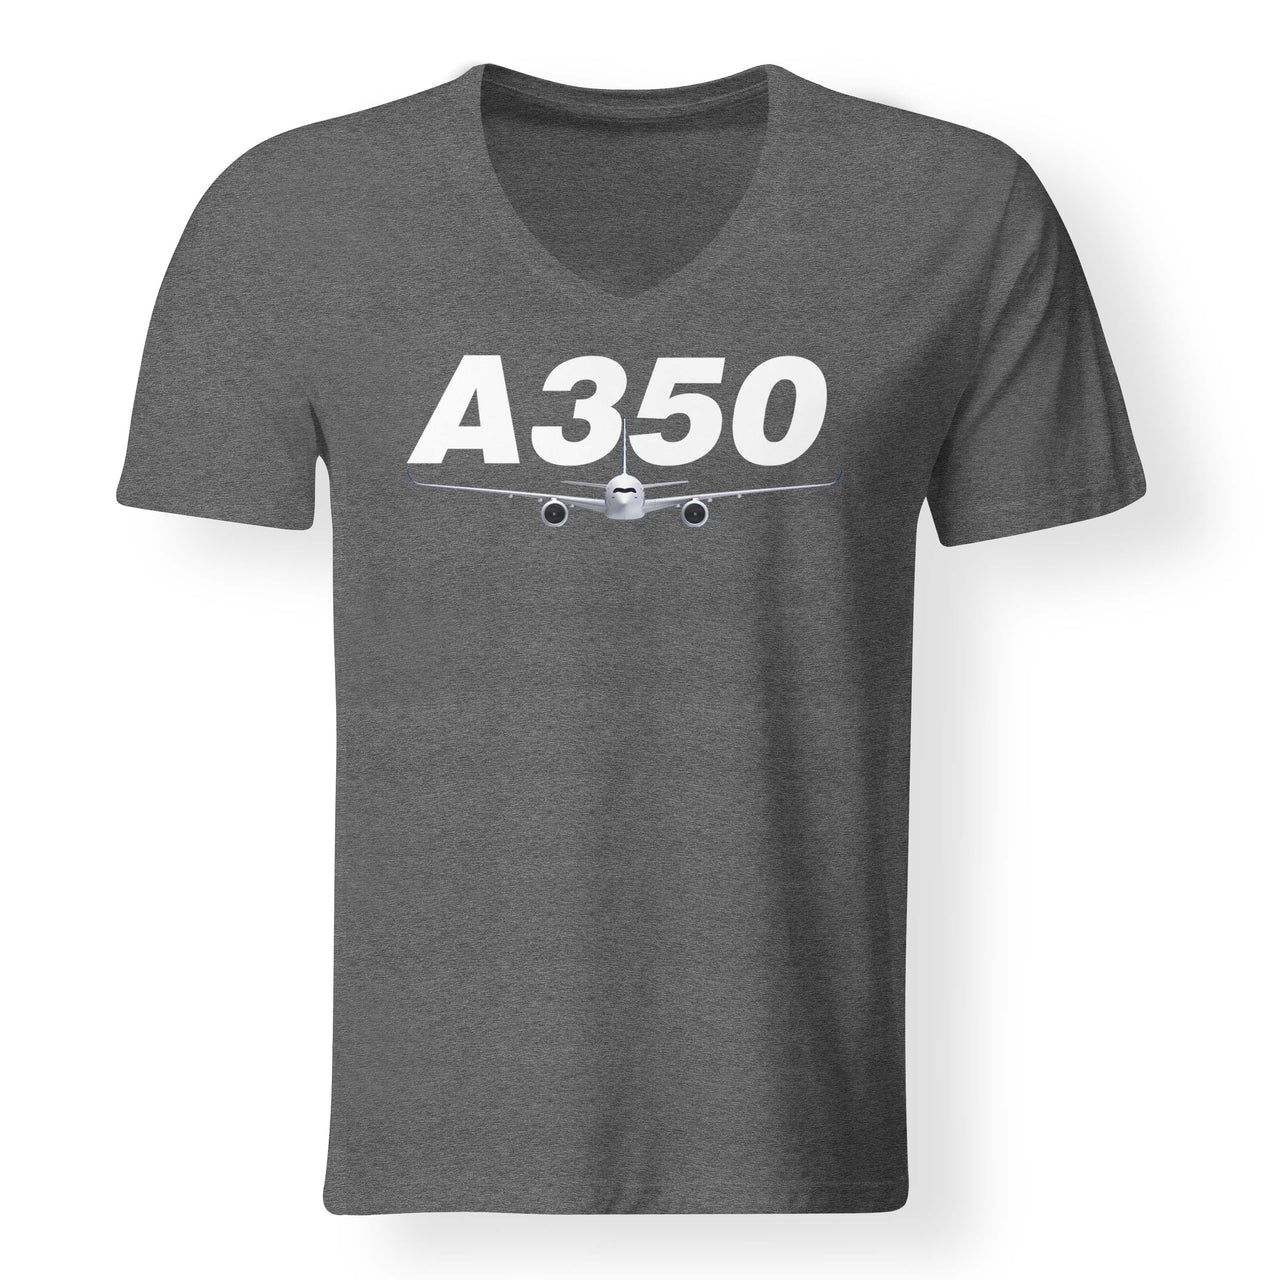 Super Airbus A350 Designed V-Neck T-Shirts